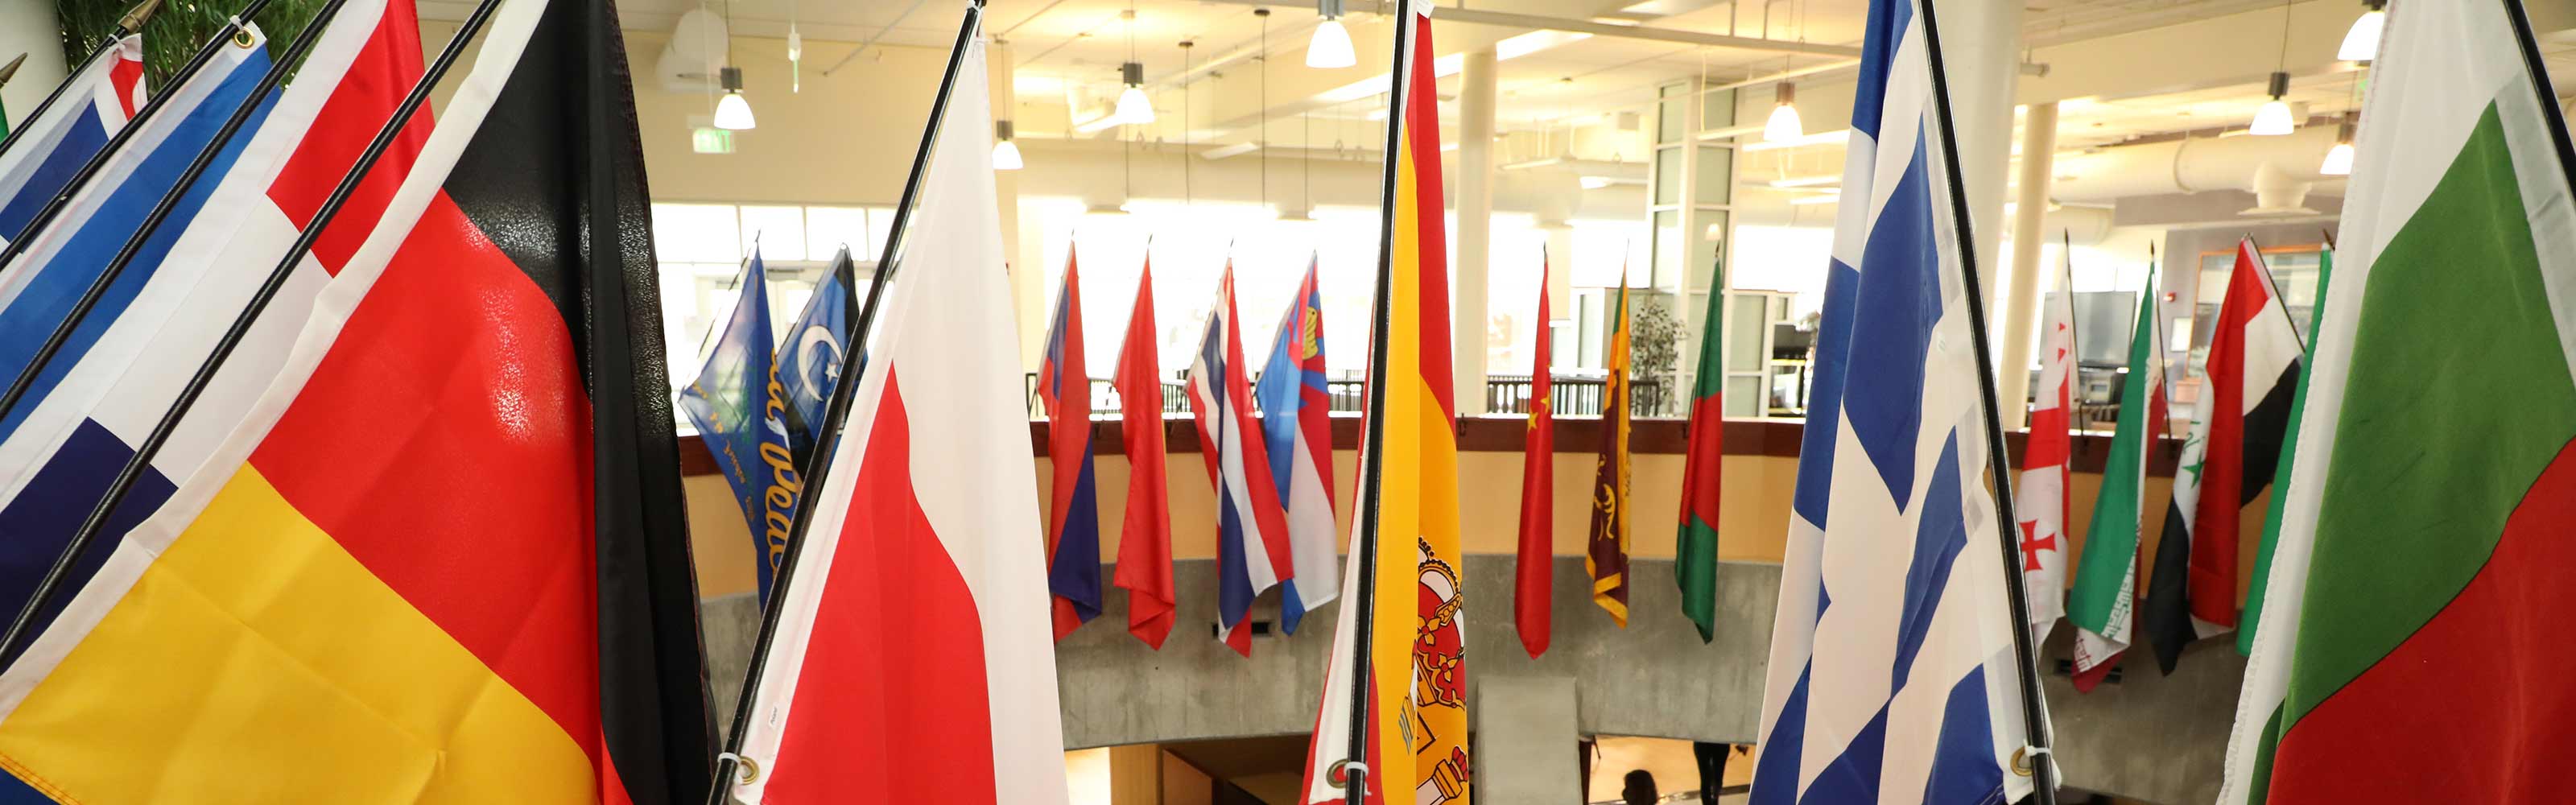 SMSU campus display of international flags